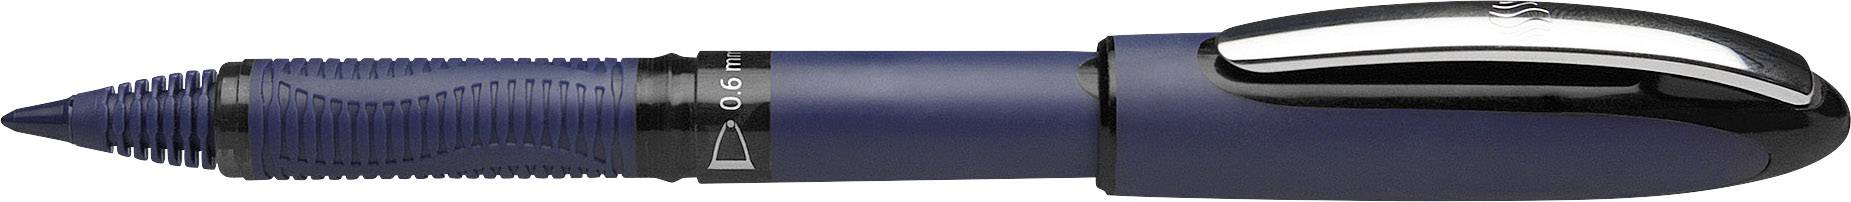 richting surfen Ontcijferen Schneider Roller ball pen One Business 0.6 mm Black 183001 1 pc(s) |  Conrad.com